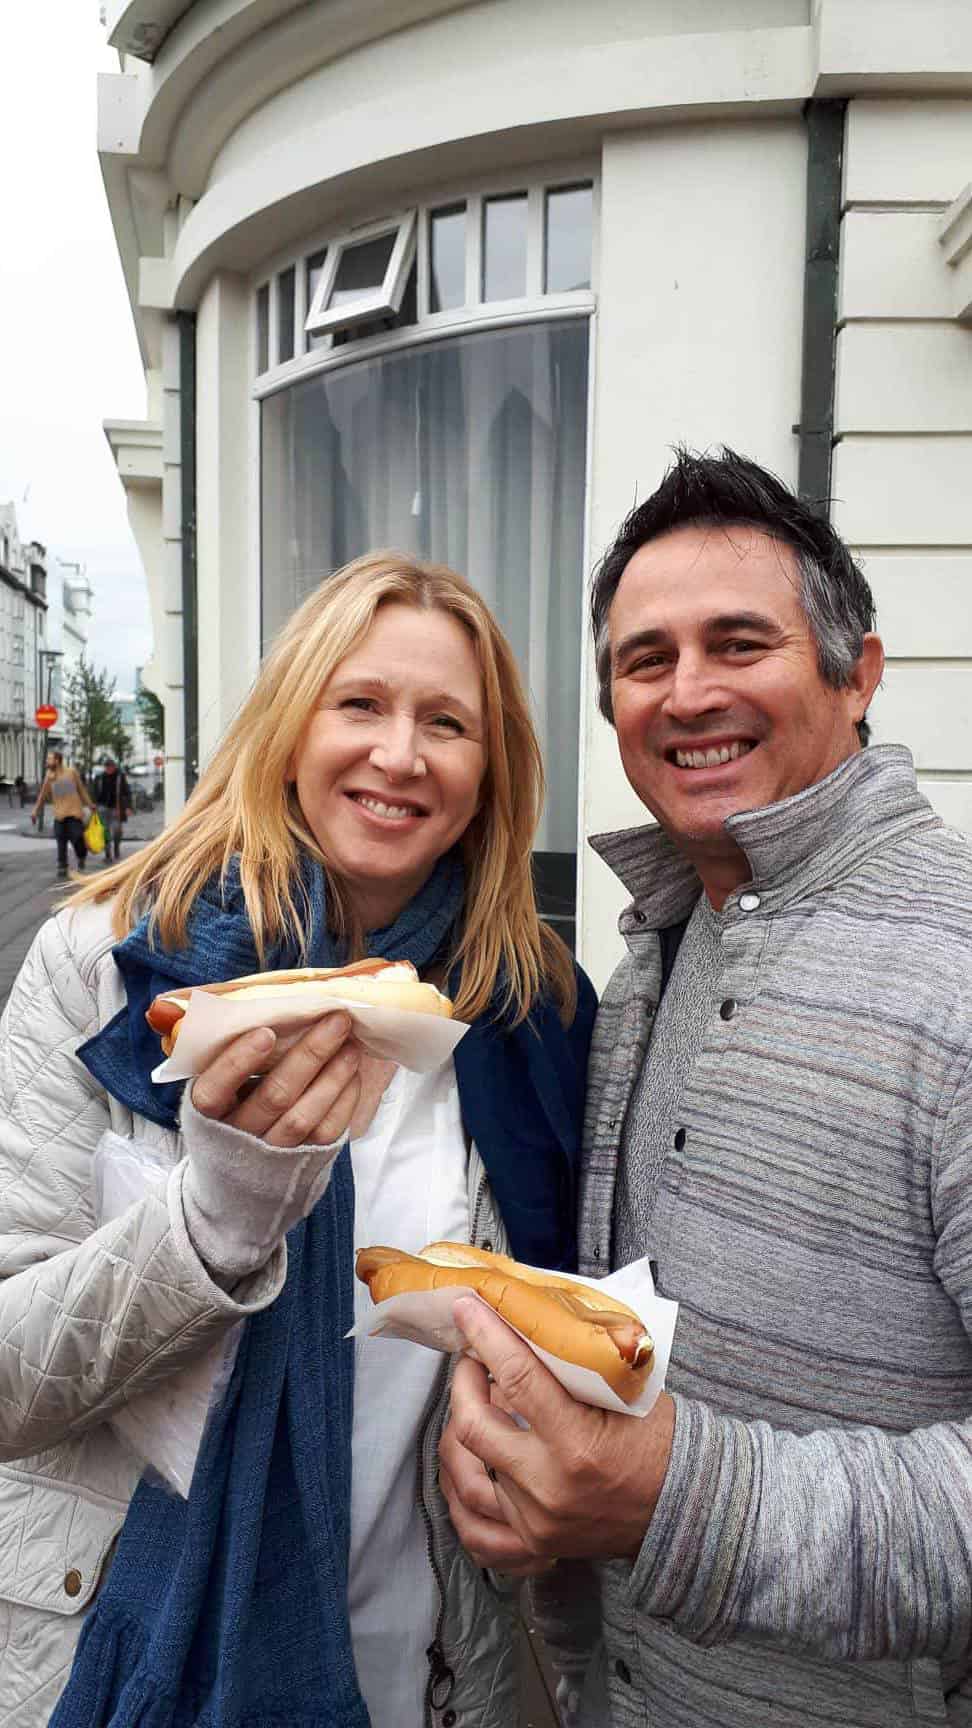 Having a delicious Icelandic Hot dog